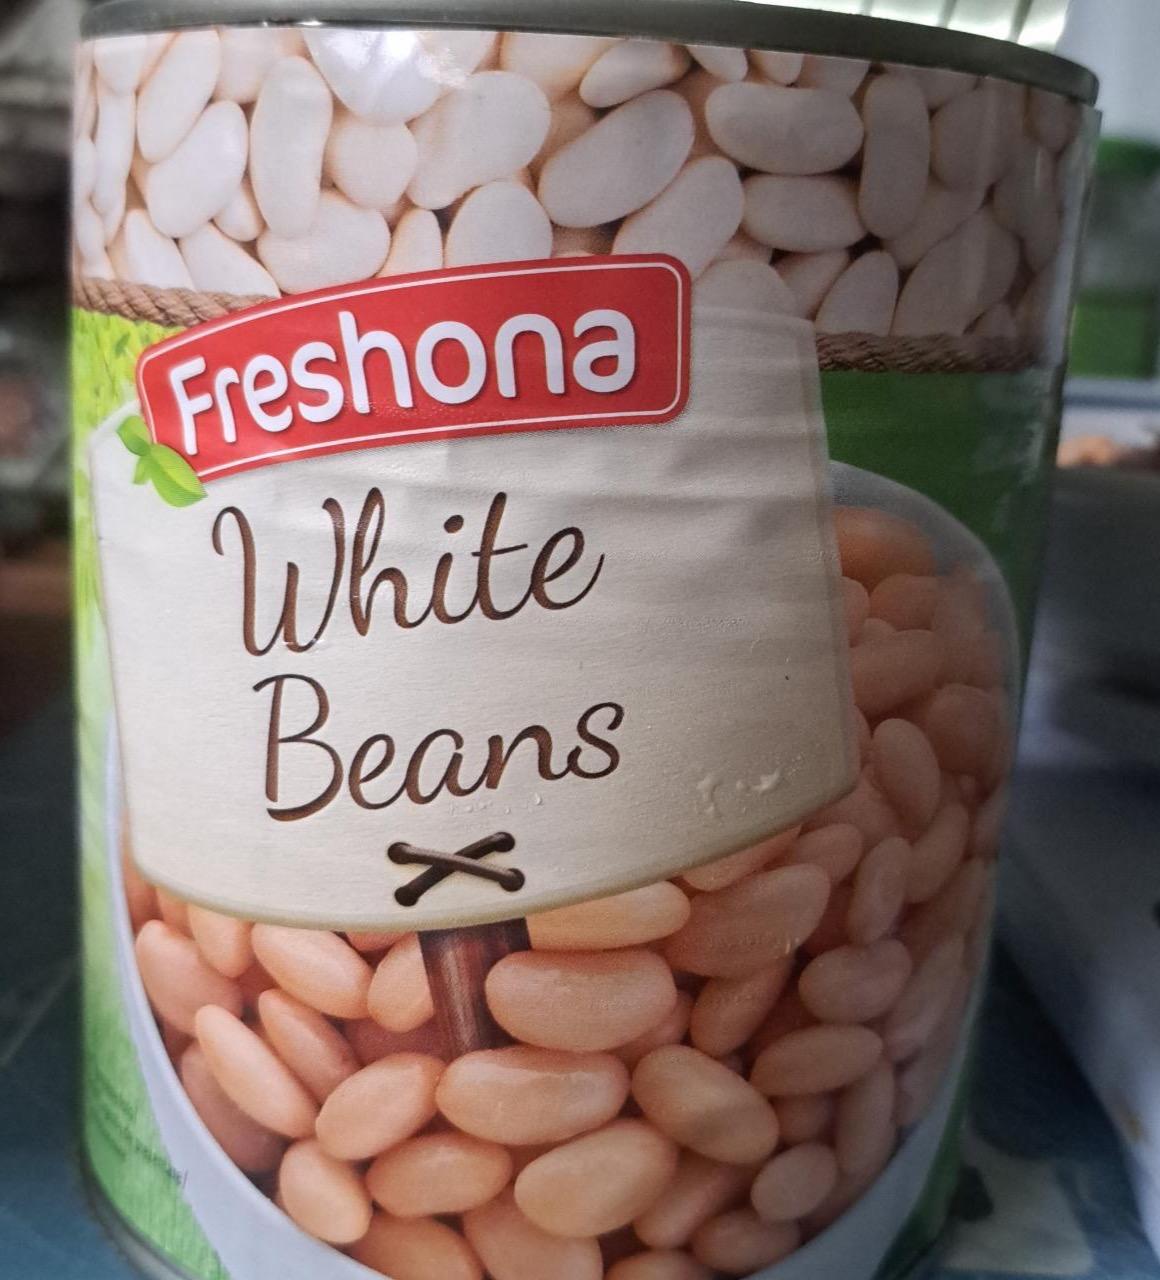 Képek - White beans Freshona